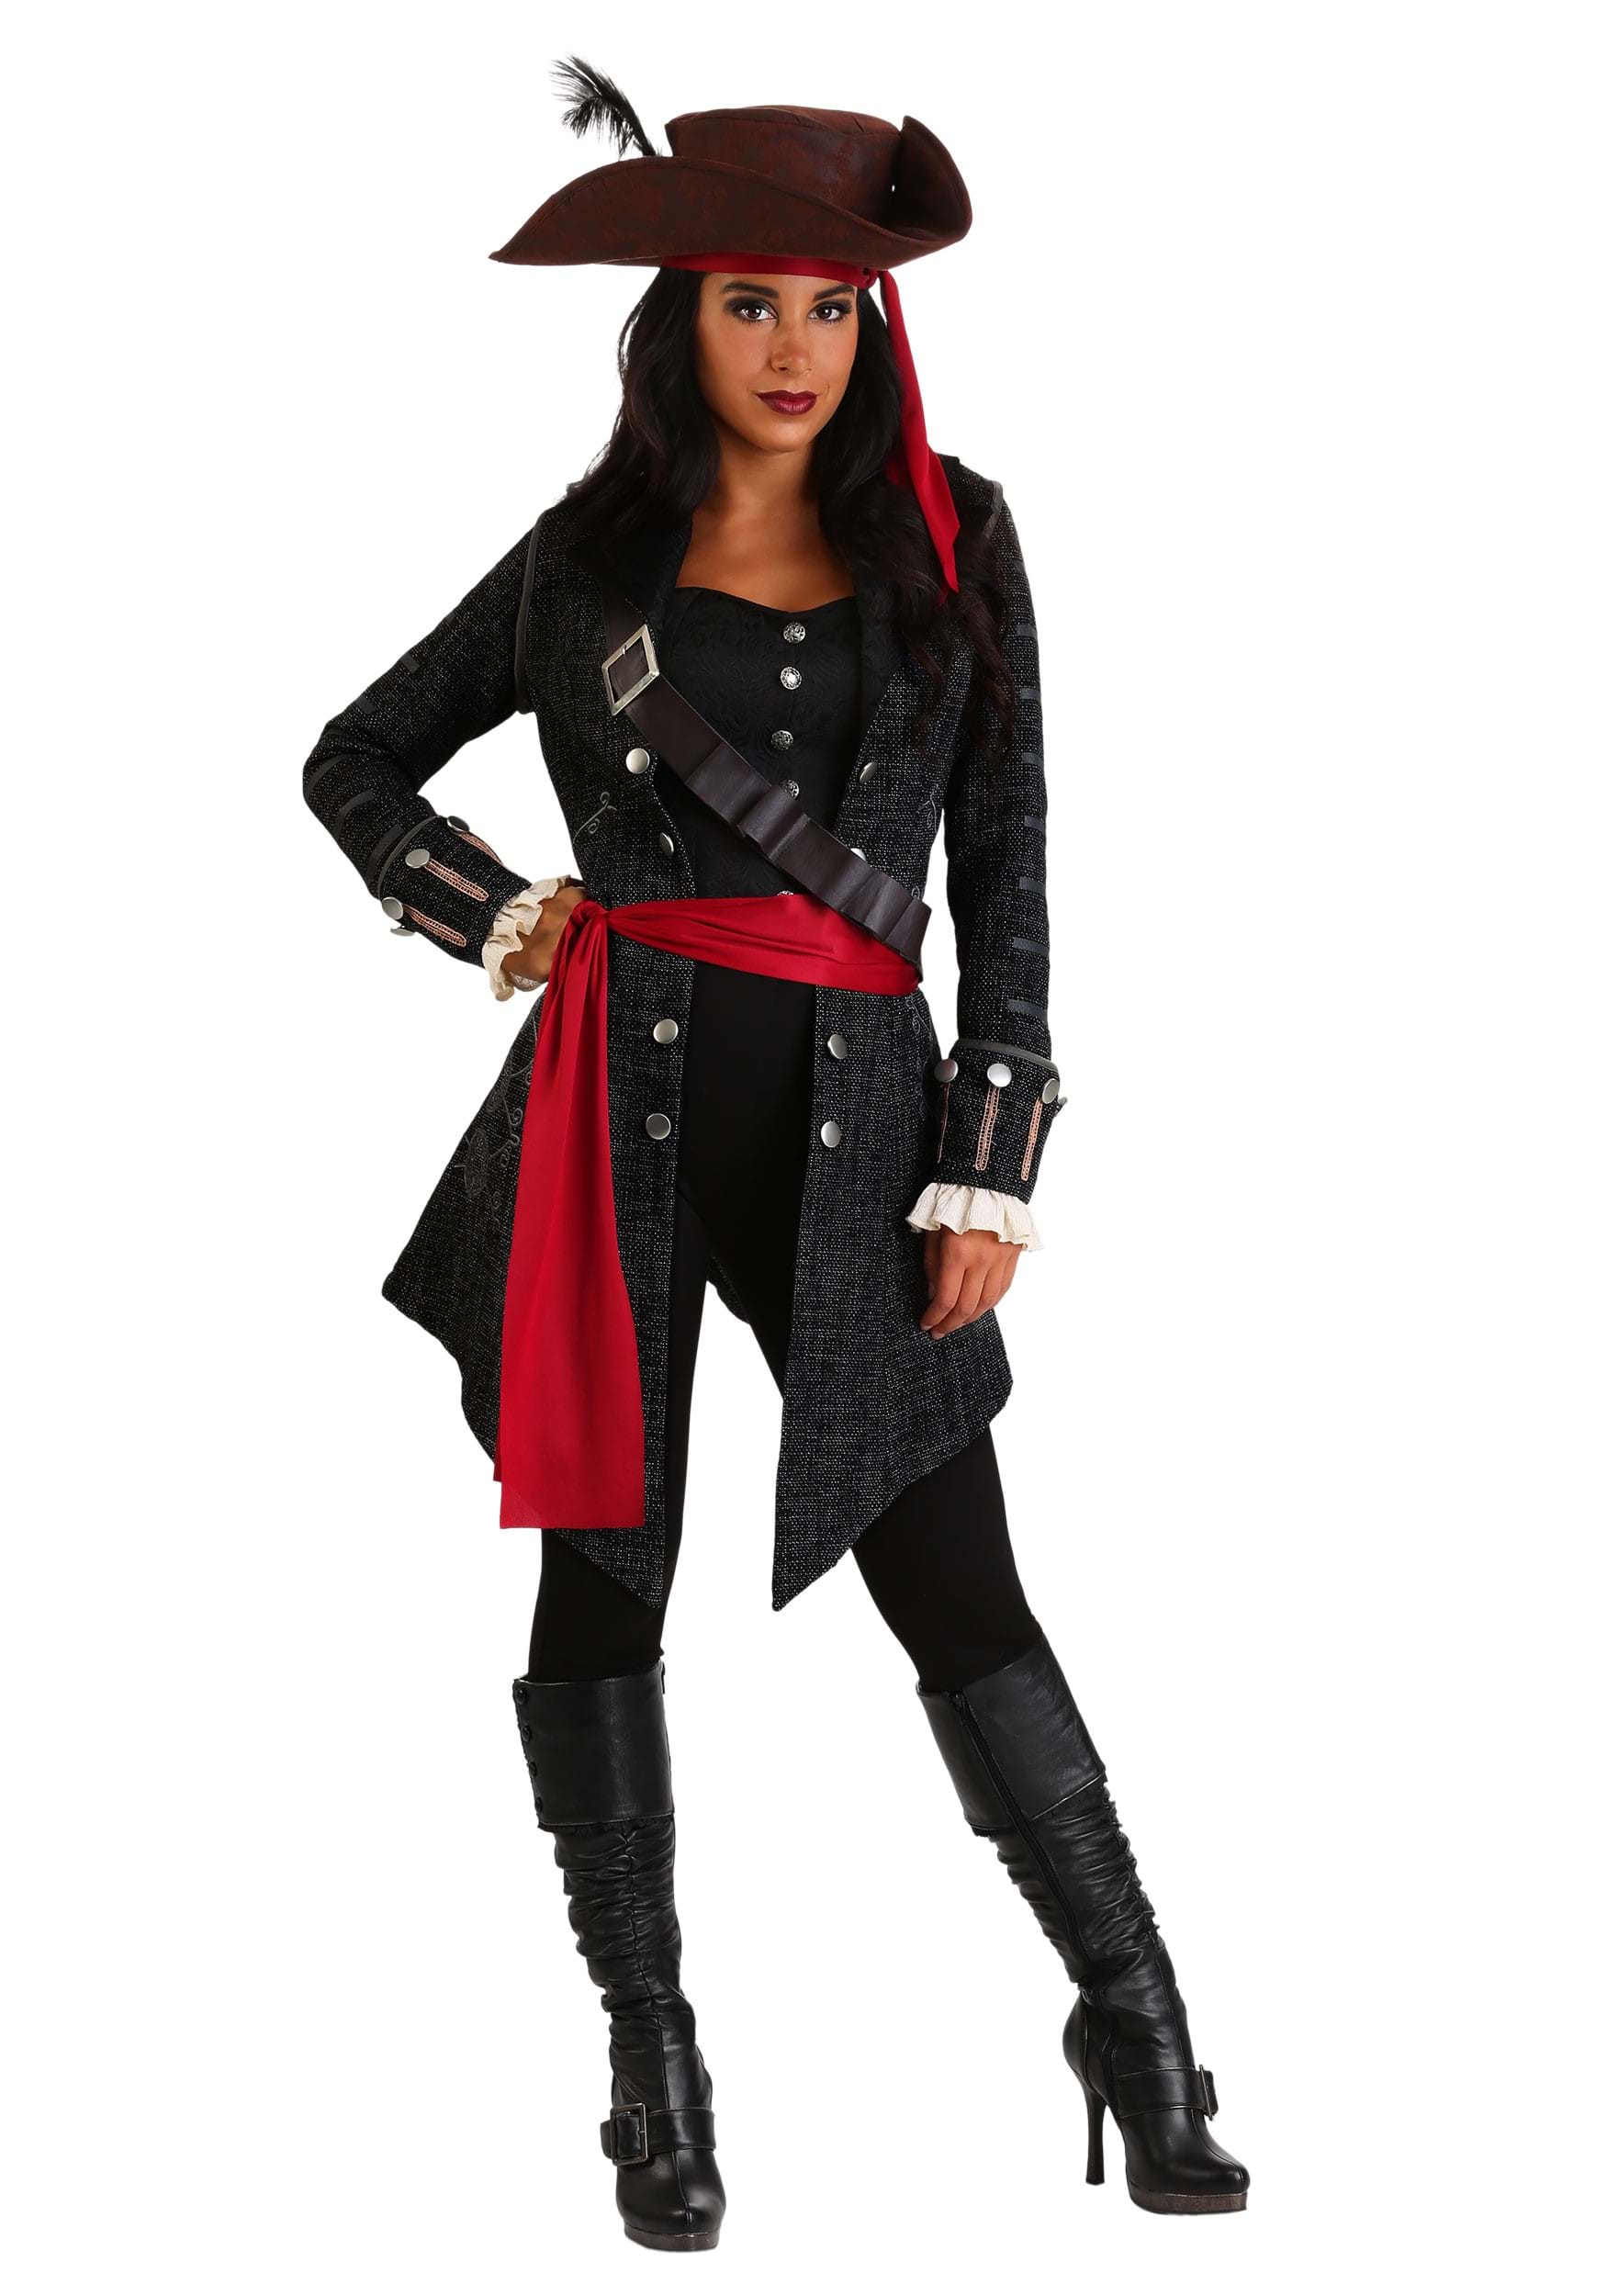 Photos - Fancy Dress FUN Costumes Women's Fearless Pirate Costume Black/Brown/Red FUN07